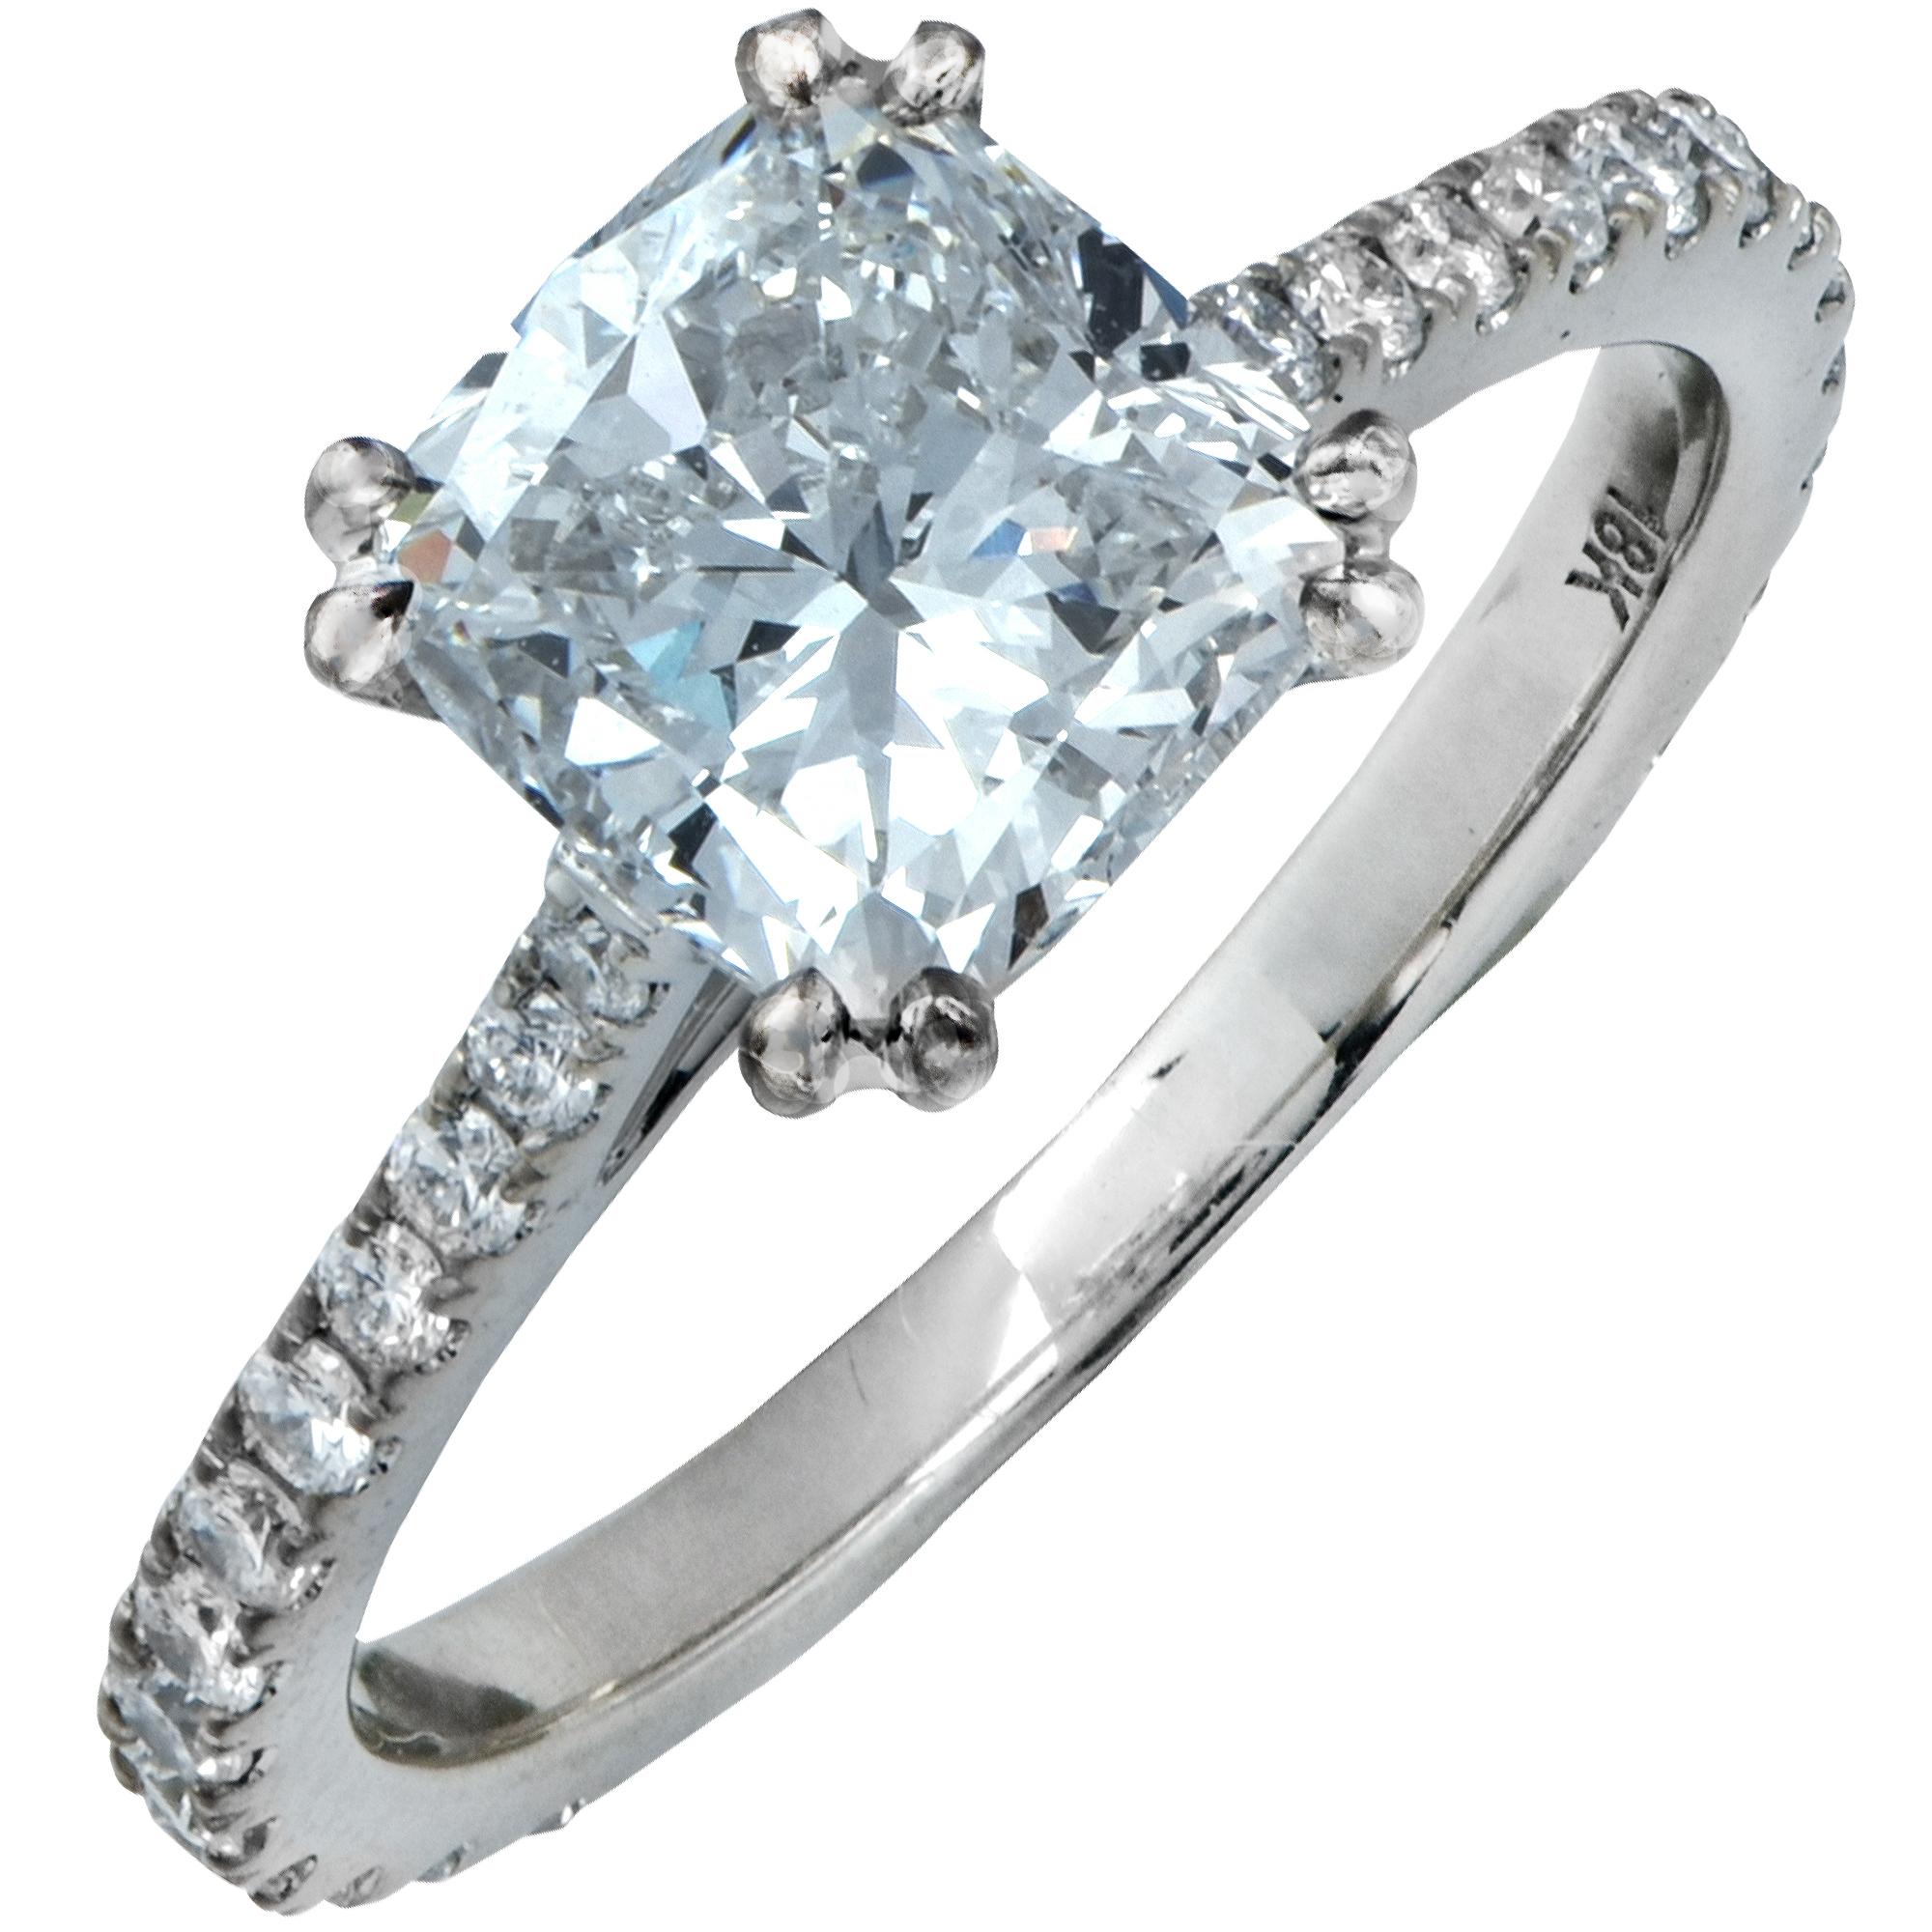 Modern Vivid Diamonds GIA Certified 2.54 Carat Cushion Cut Diamond Engagement Ring